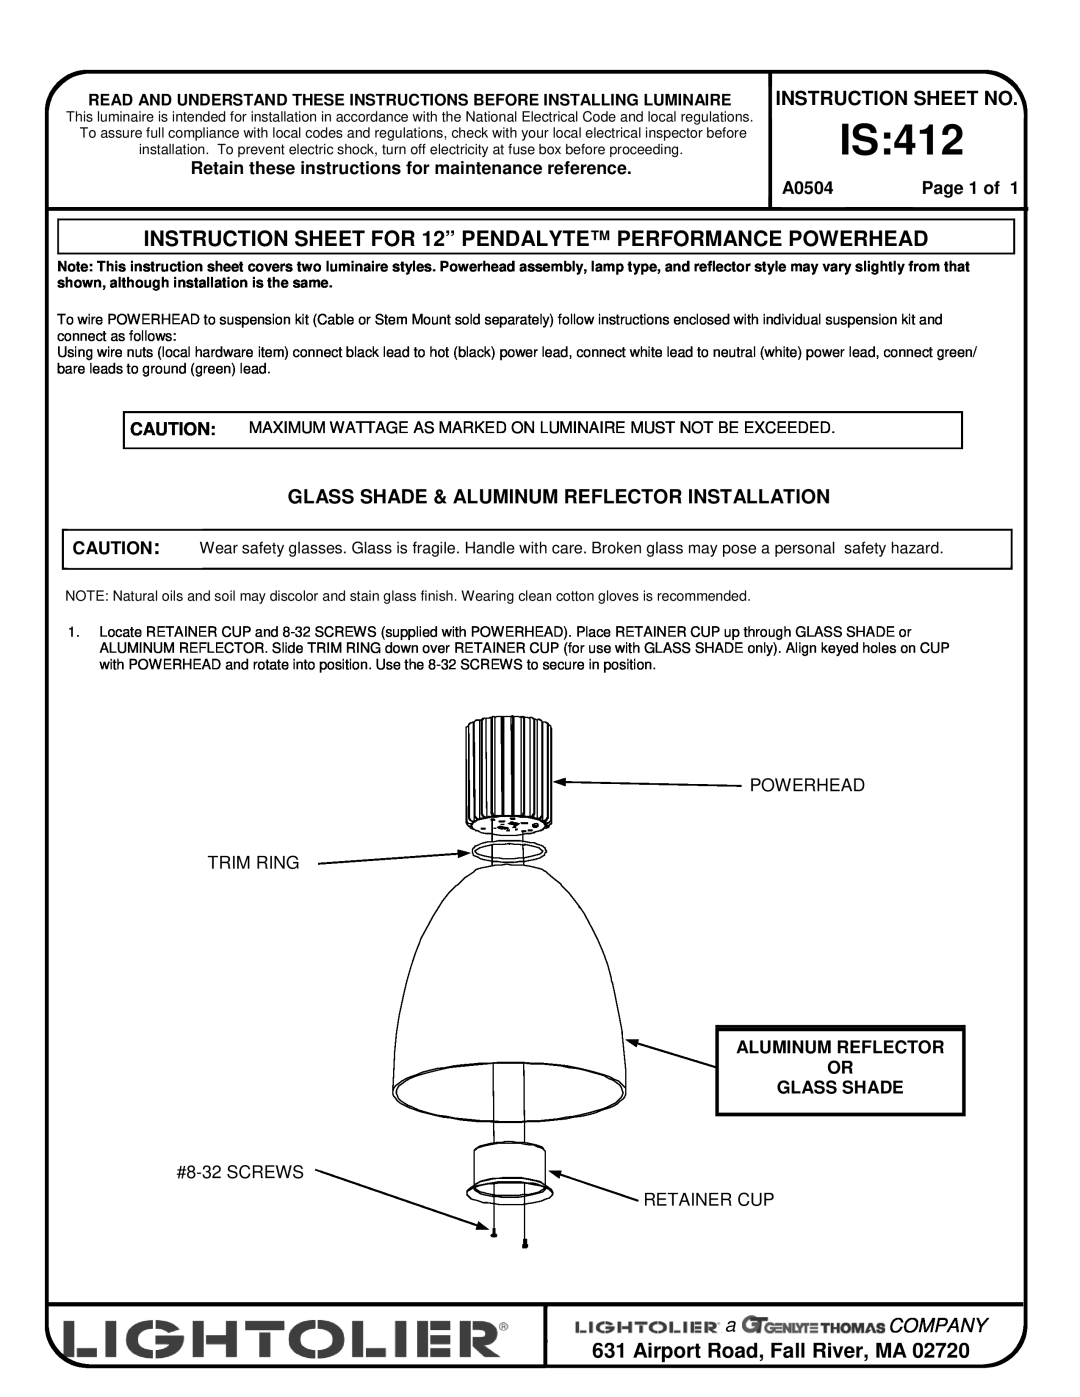 Lightolier IS:412 instruction sheet 